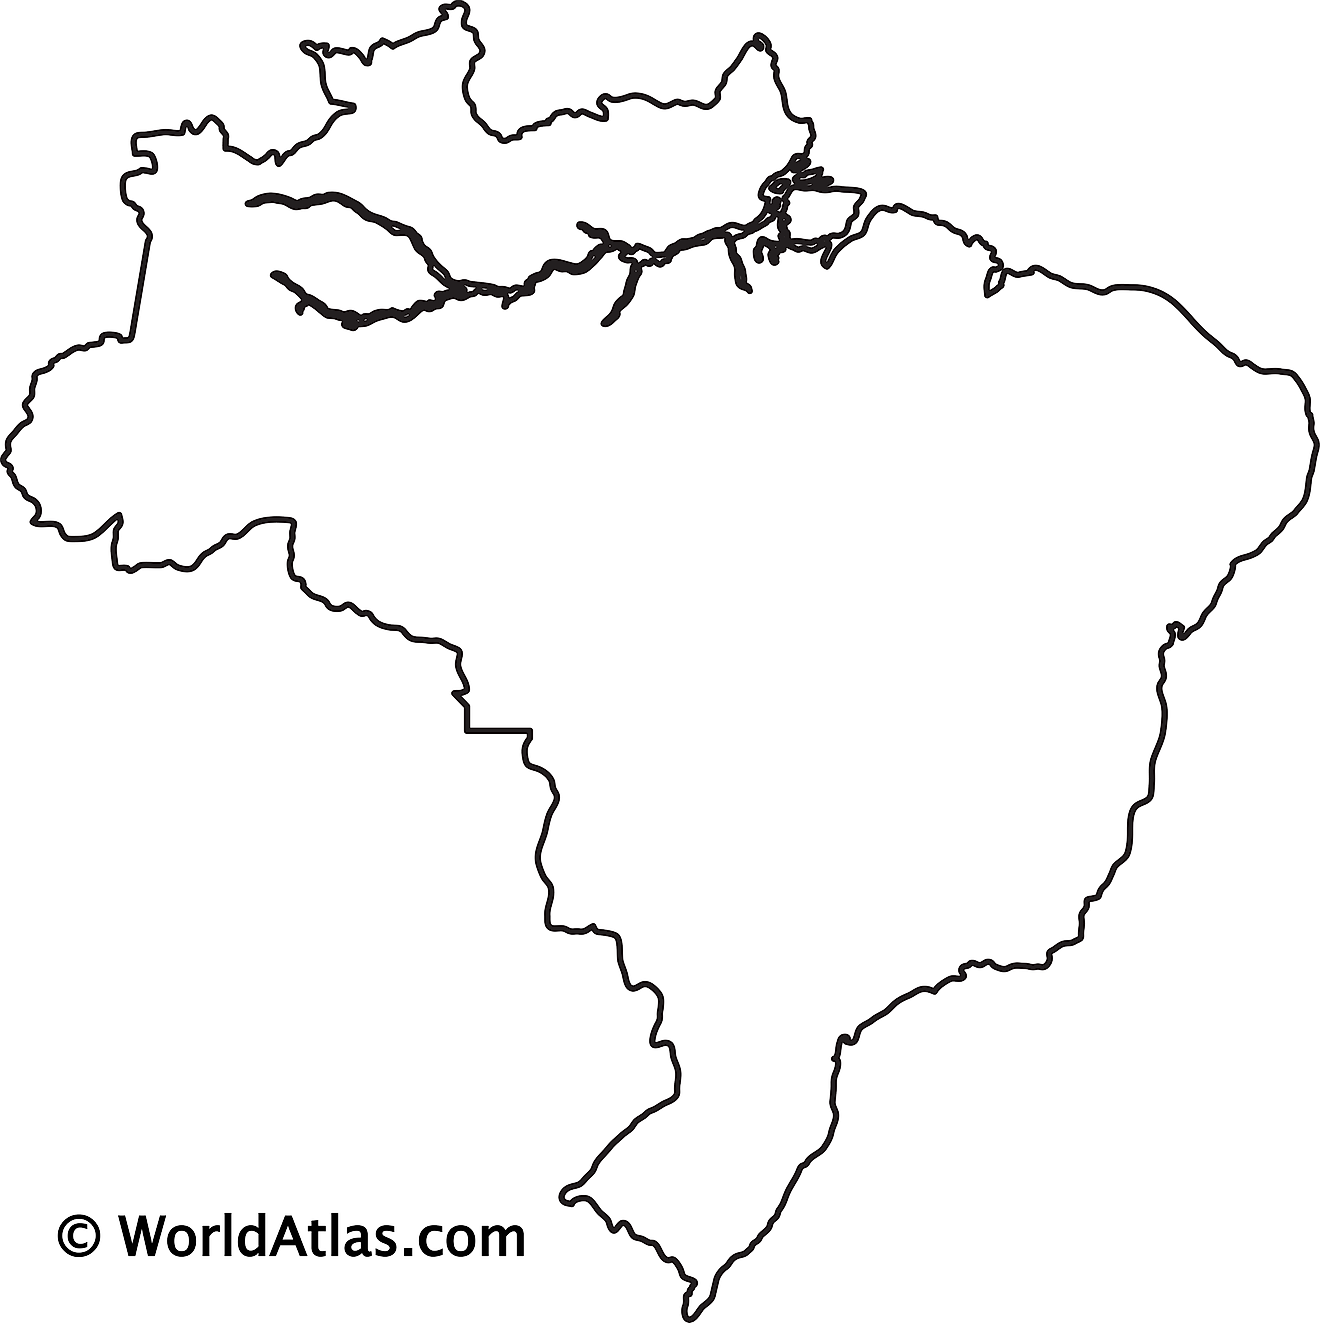 Blank Outline Map of Brazil